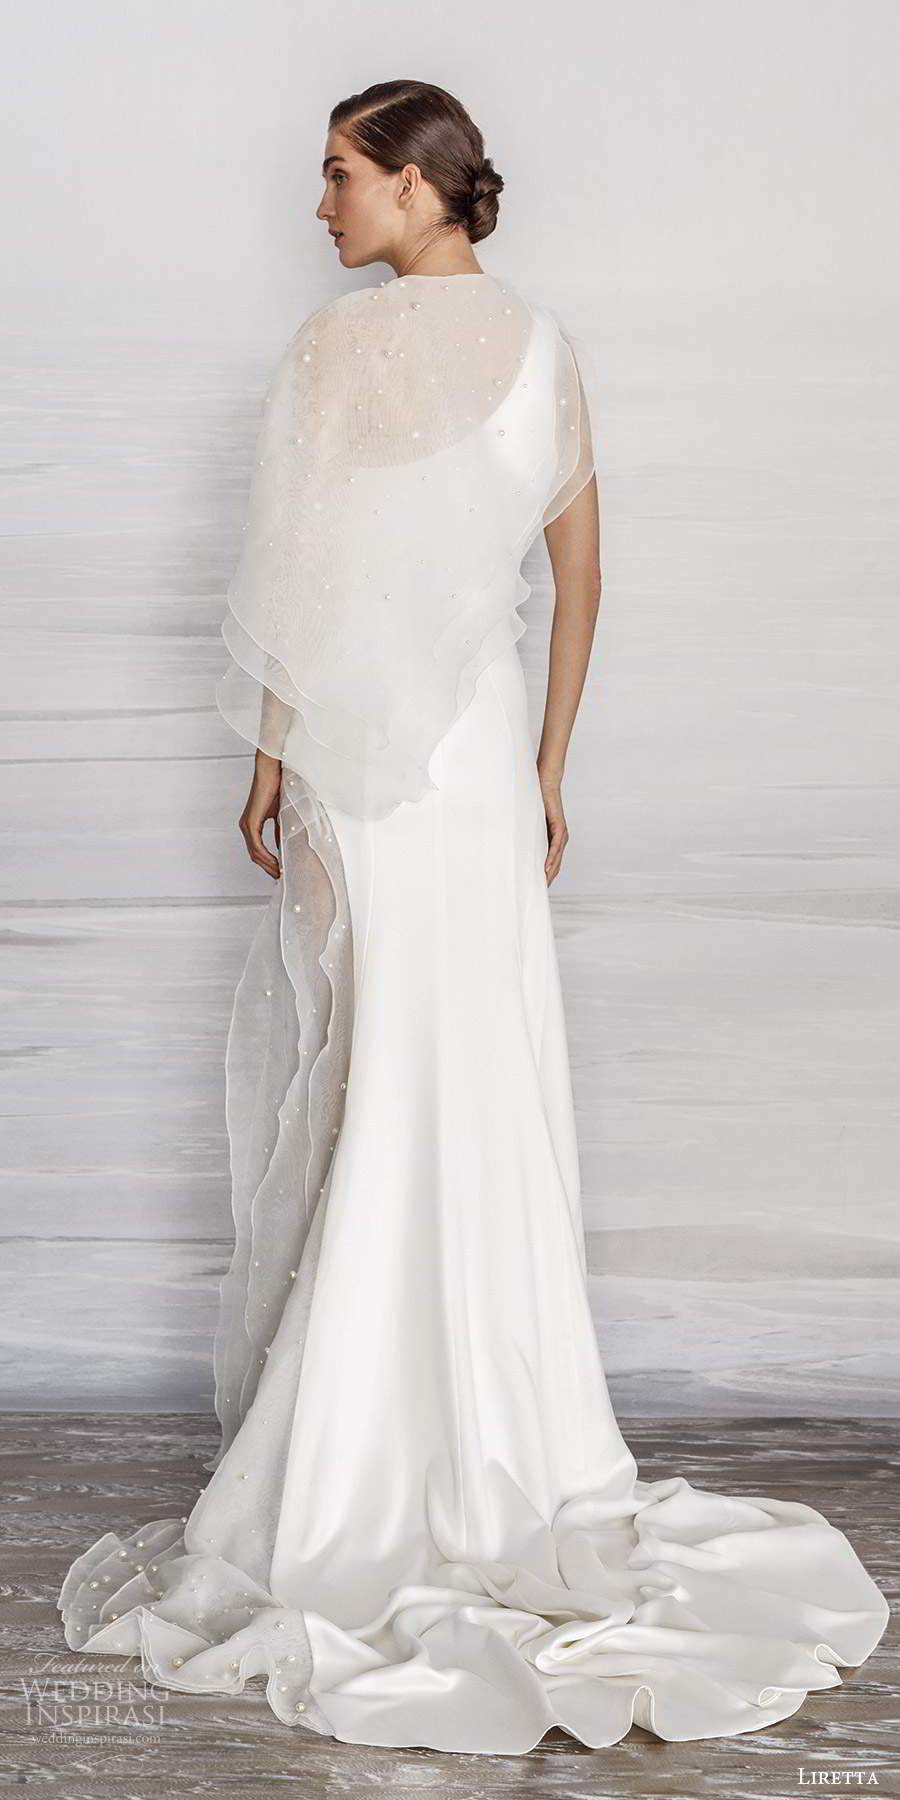 liretta 2021 bridal sleeveless one shoulder strap clean minimalist sheath wedding dress slit skirt sweep train sheer cape (13) bv